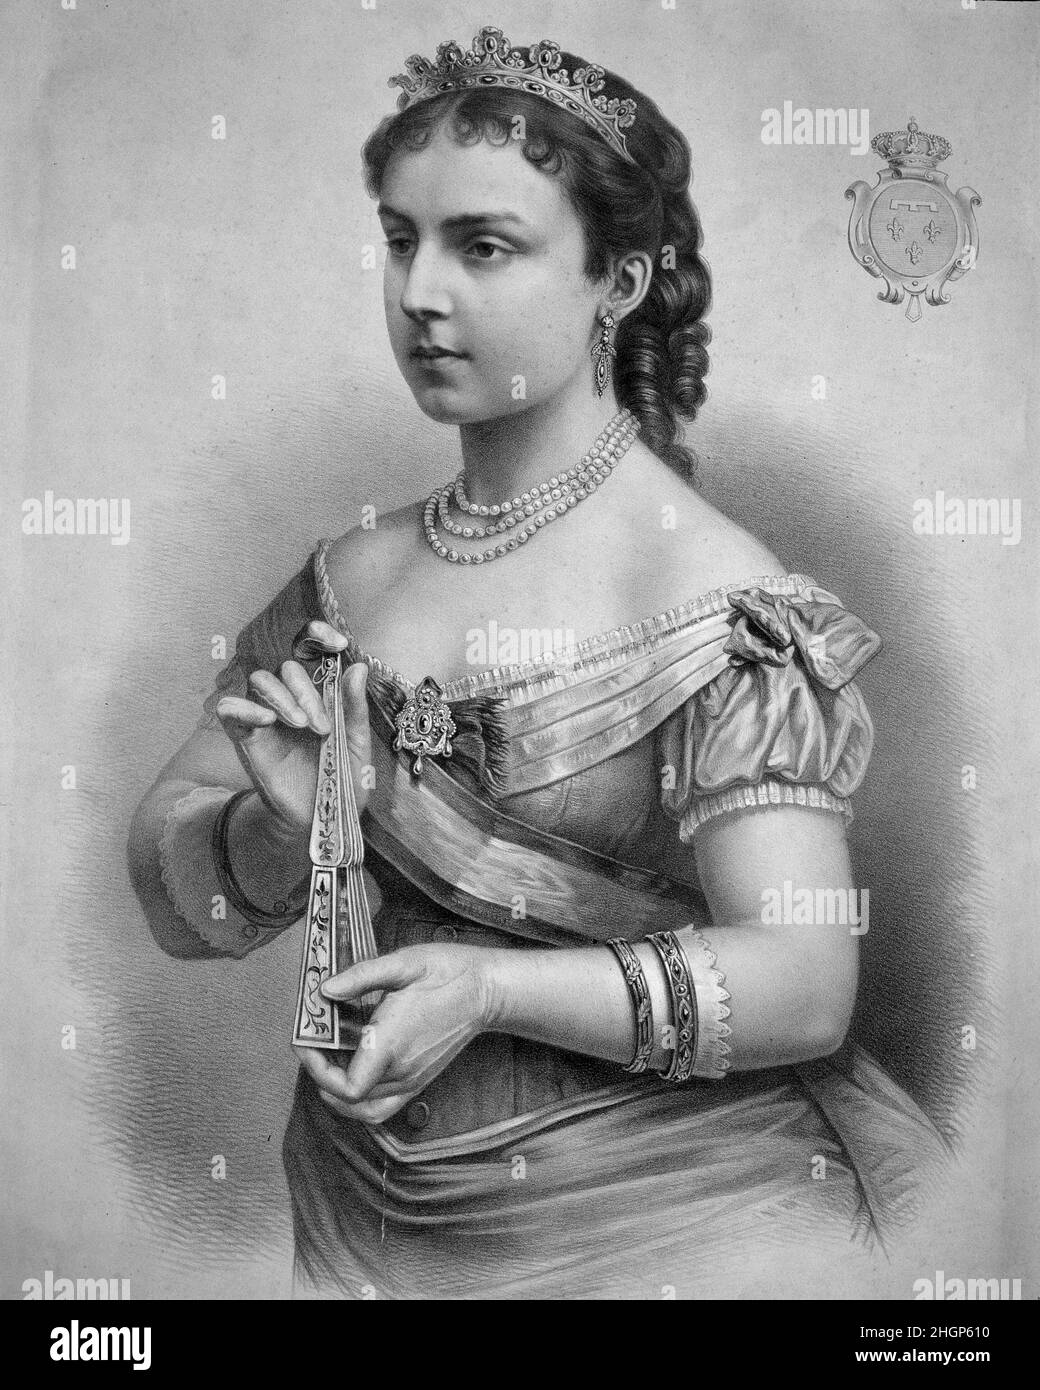 MARIA DE LAS MERCEDES ORLEANS Y BORBON. REINA DE ESPAÑA. 1860 - 1878. ESPOSA DE ALFONSO XII. GRABADO DE L . TURGIS . PARIS. Stock Photo